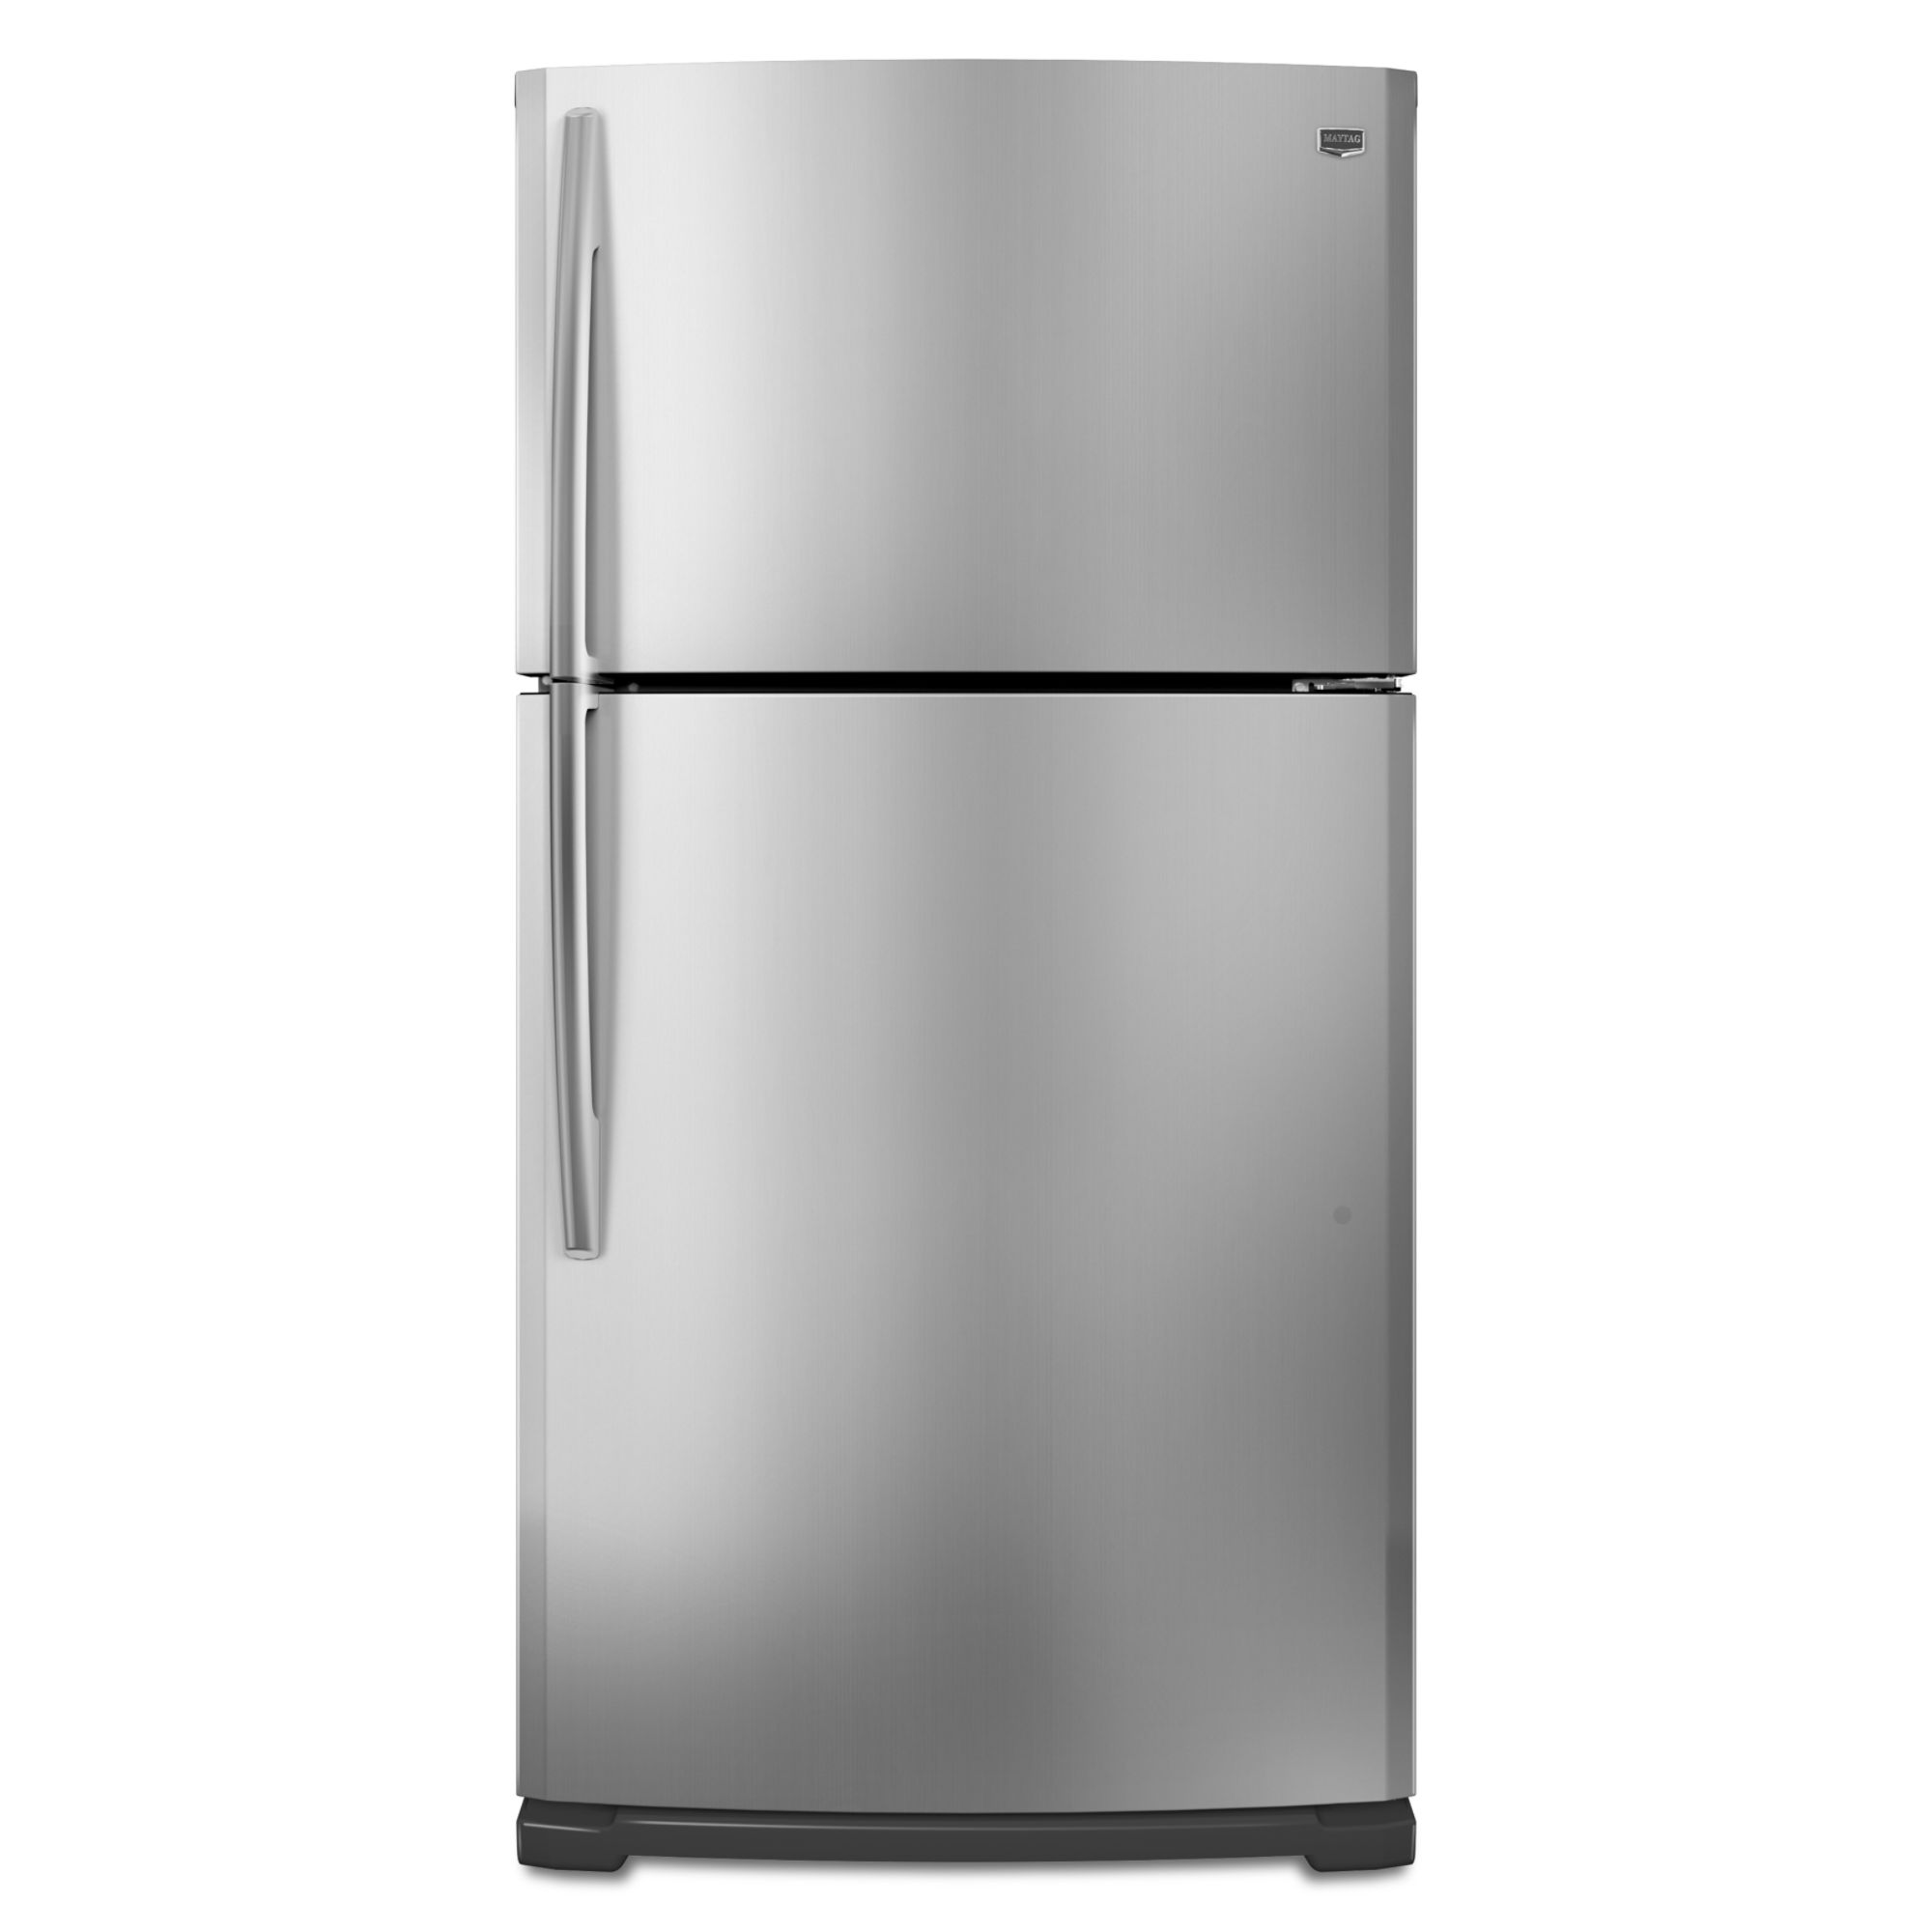 Kenmore - 72153 - 21.0 cu. ft. Top-Freezer Refrigerator w/ Ice Maker ...